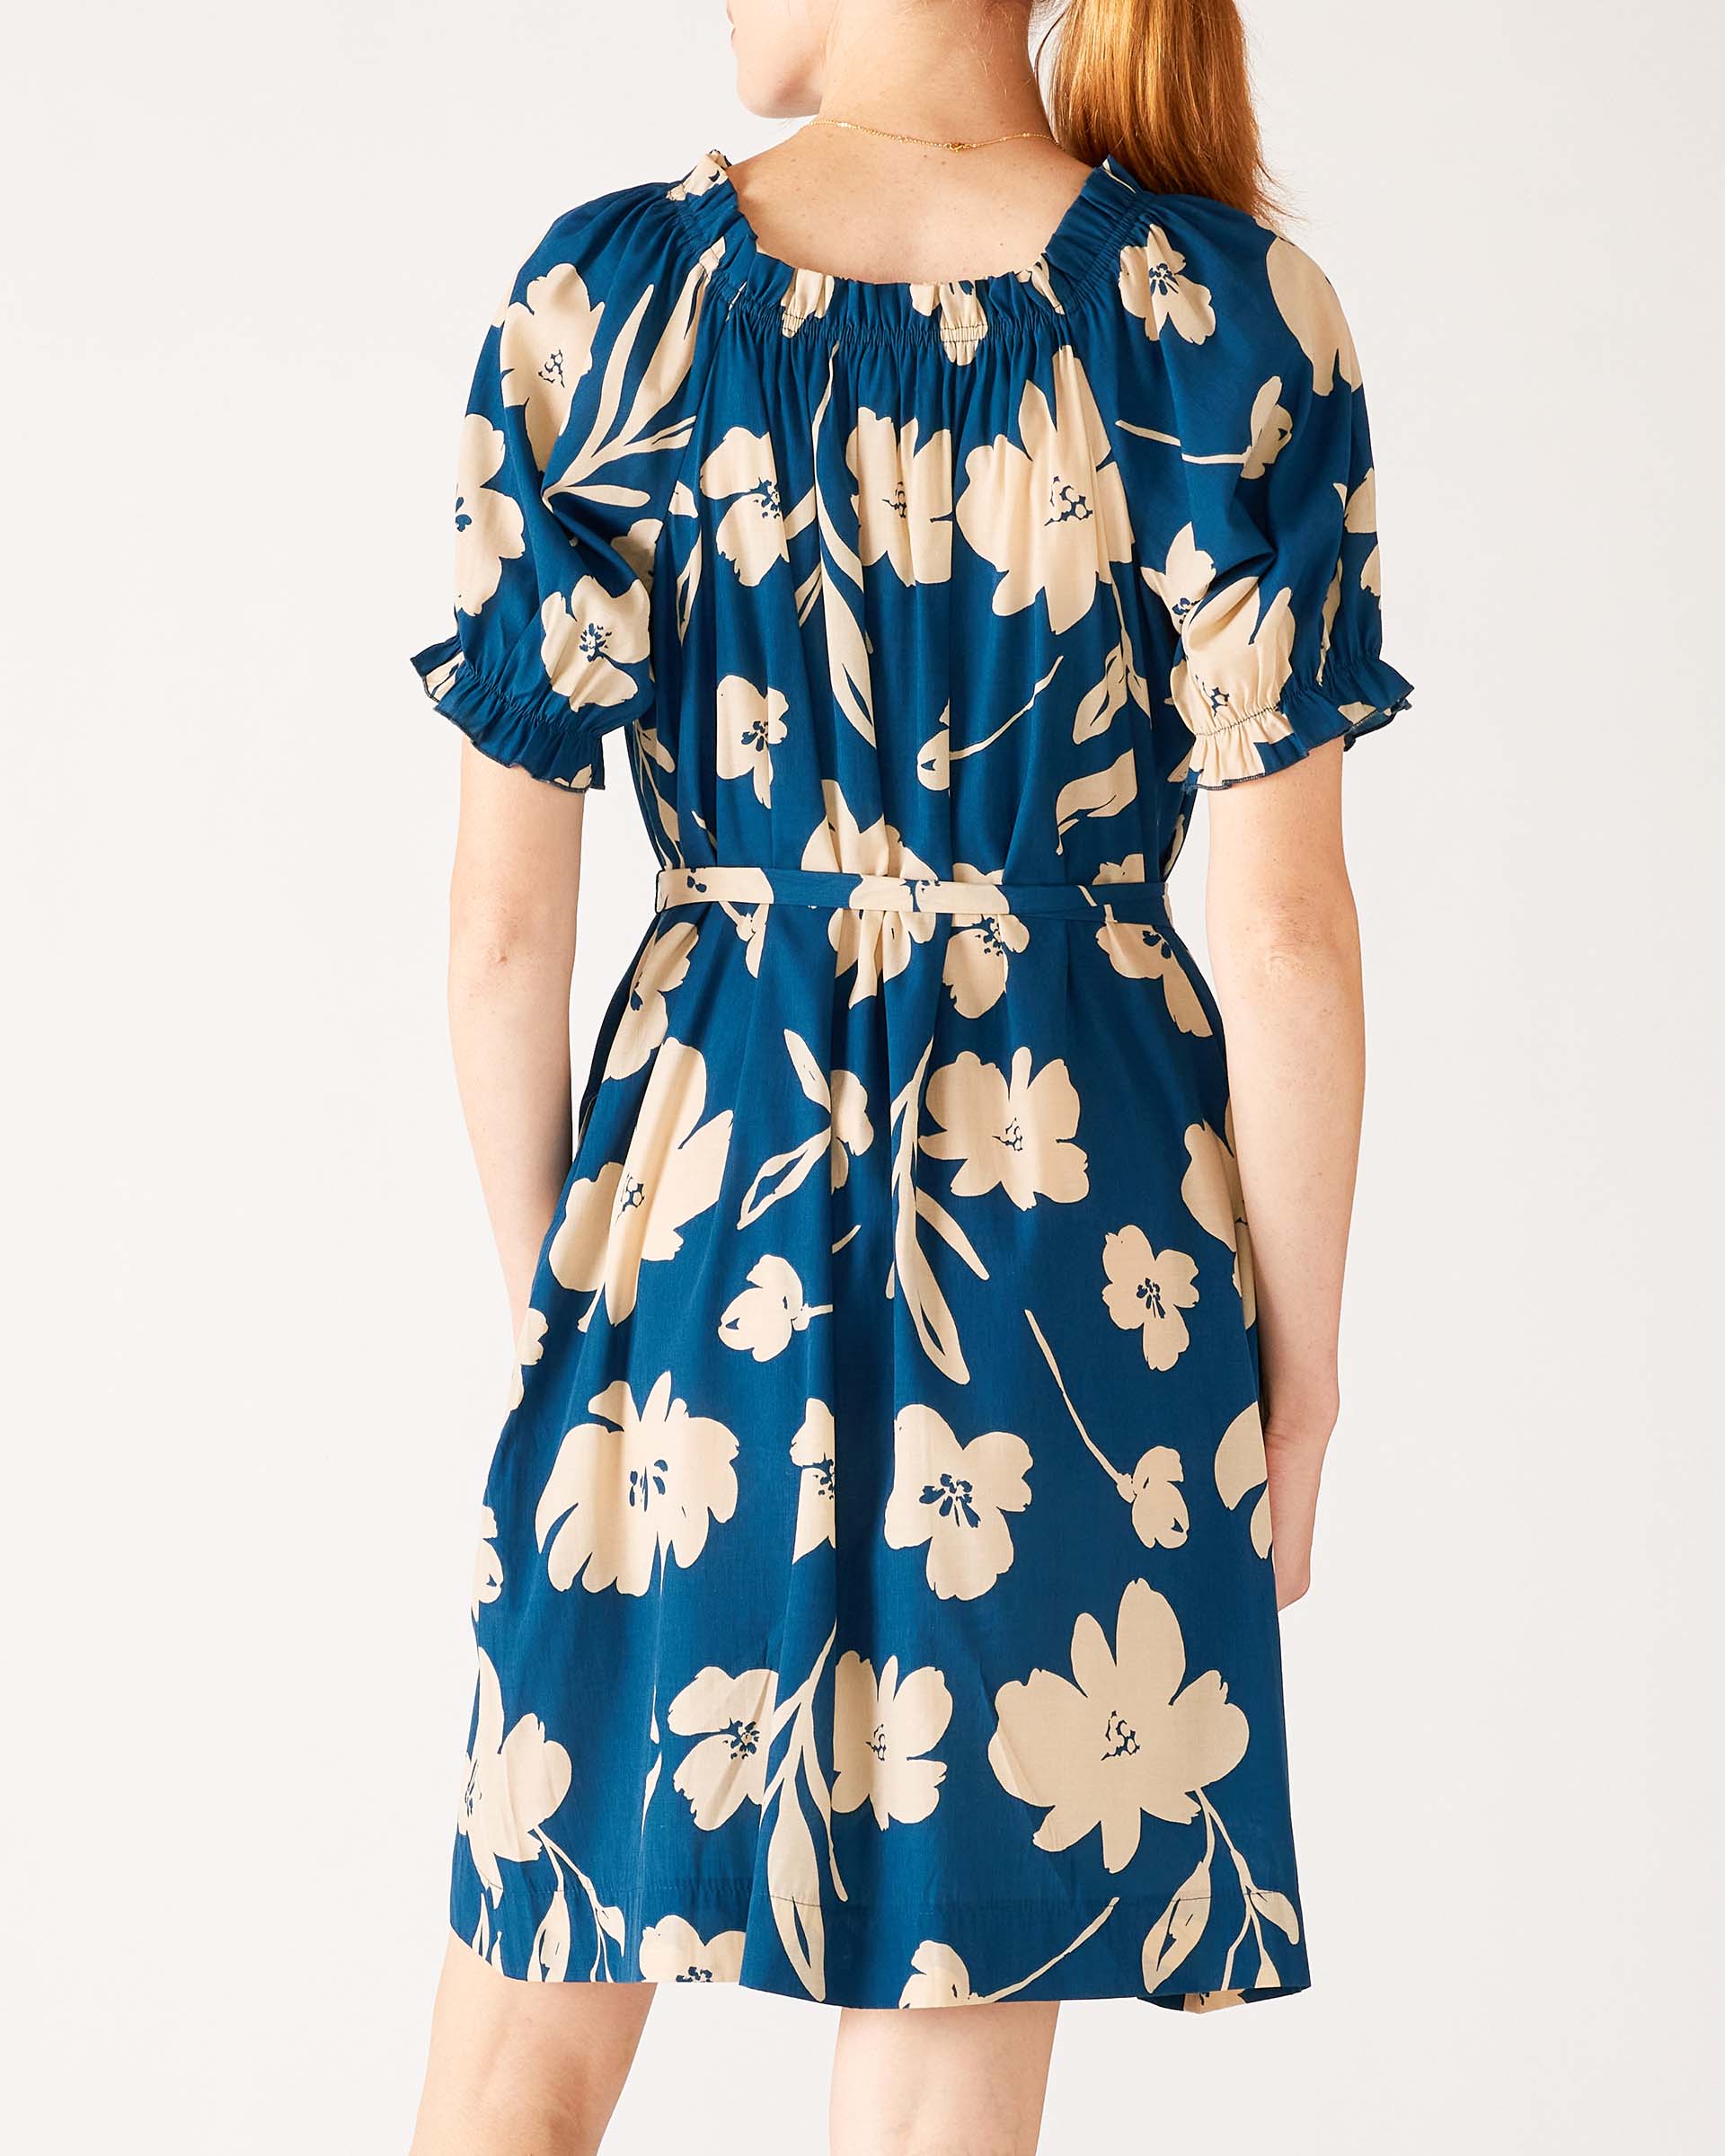 Women's Floral Navy Blue Ruffled Shoulder Midi Dress Rear View